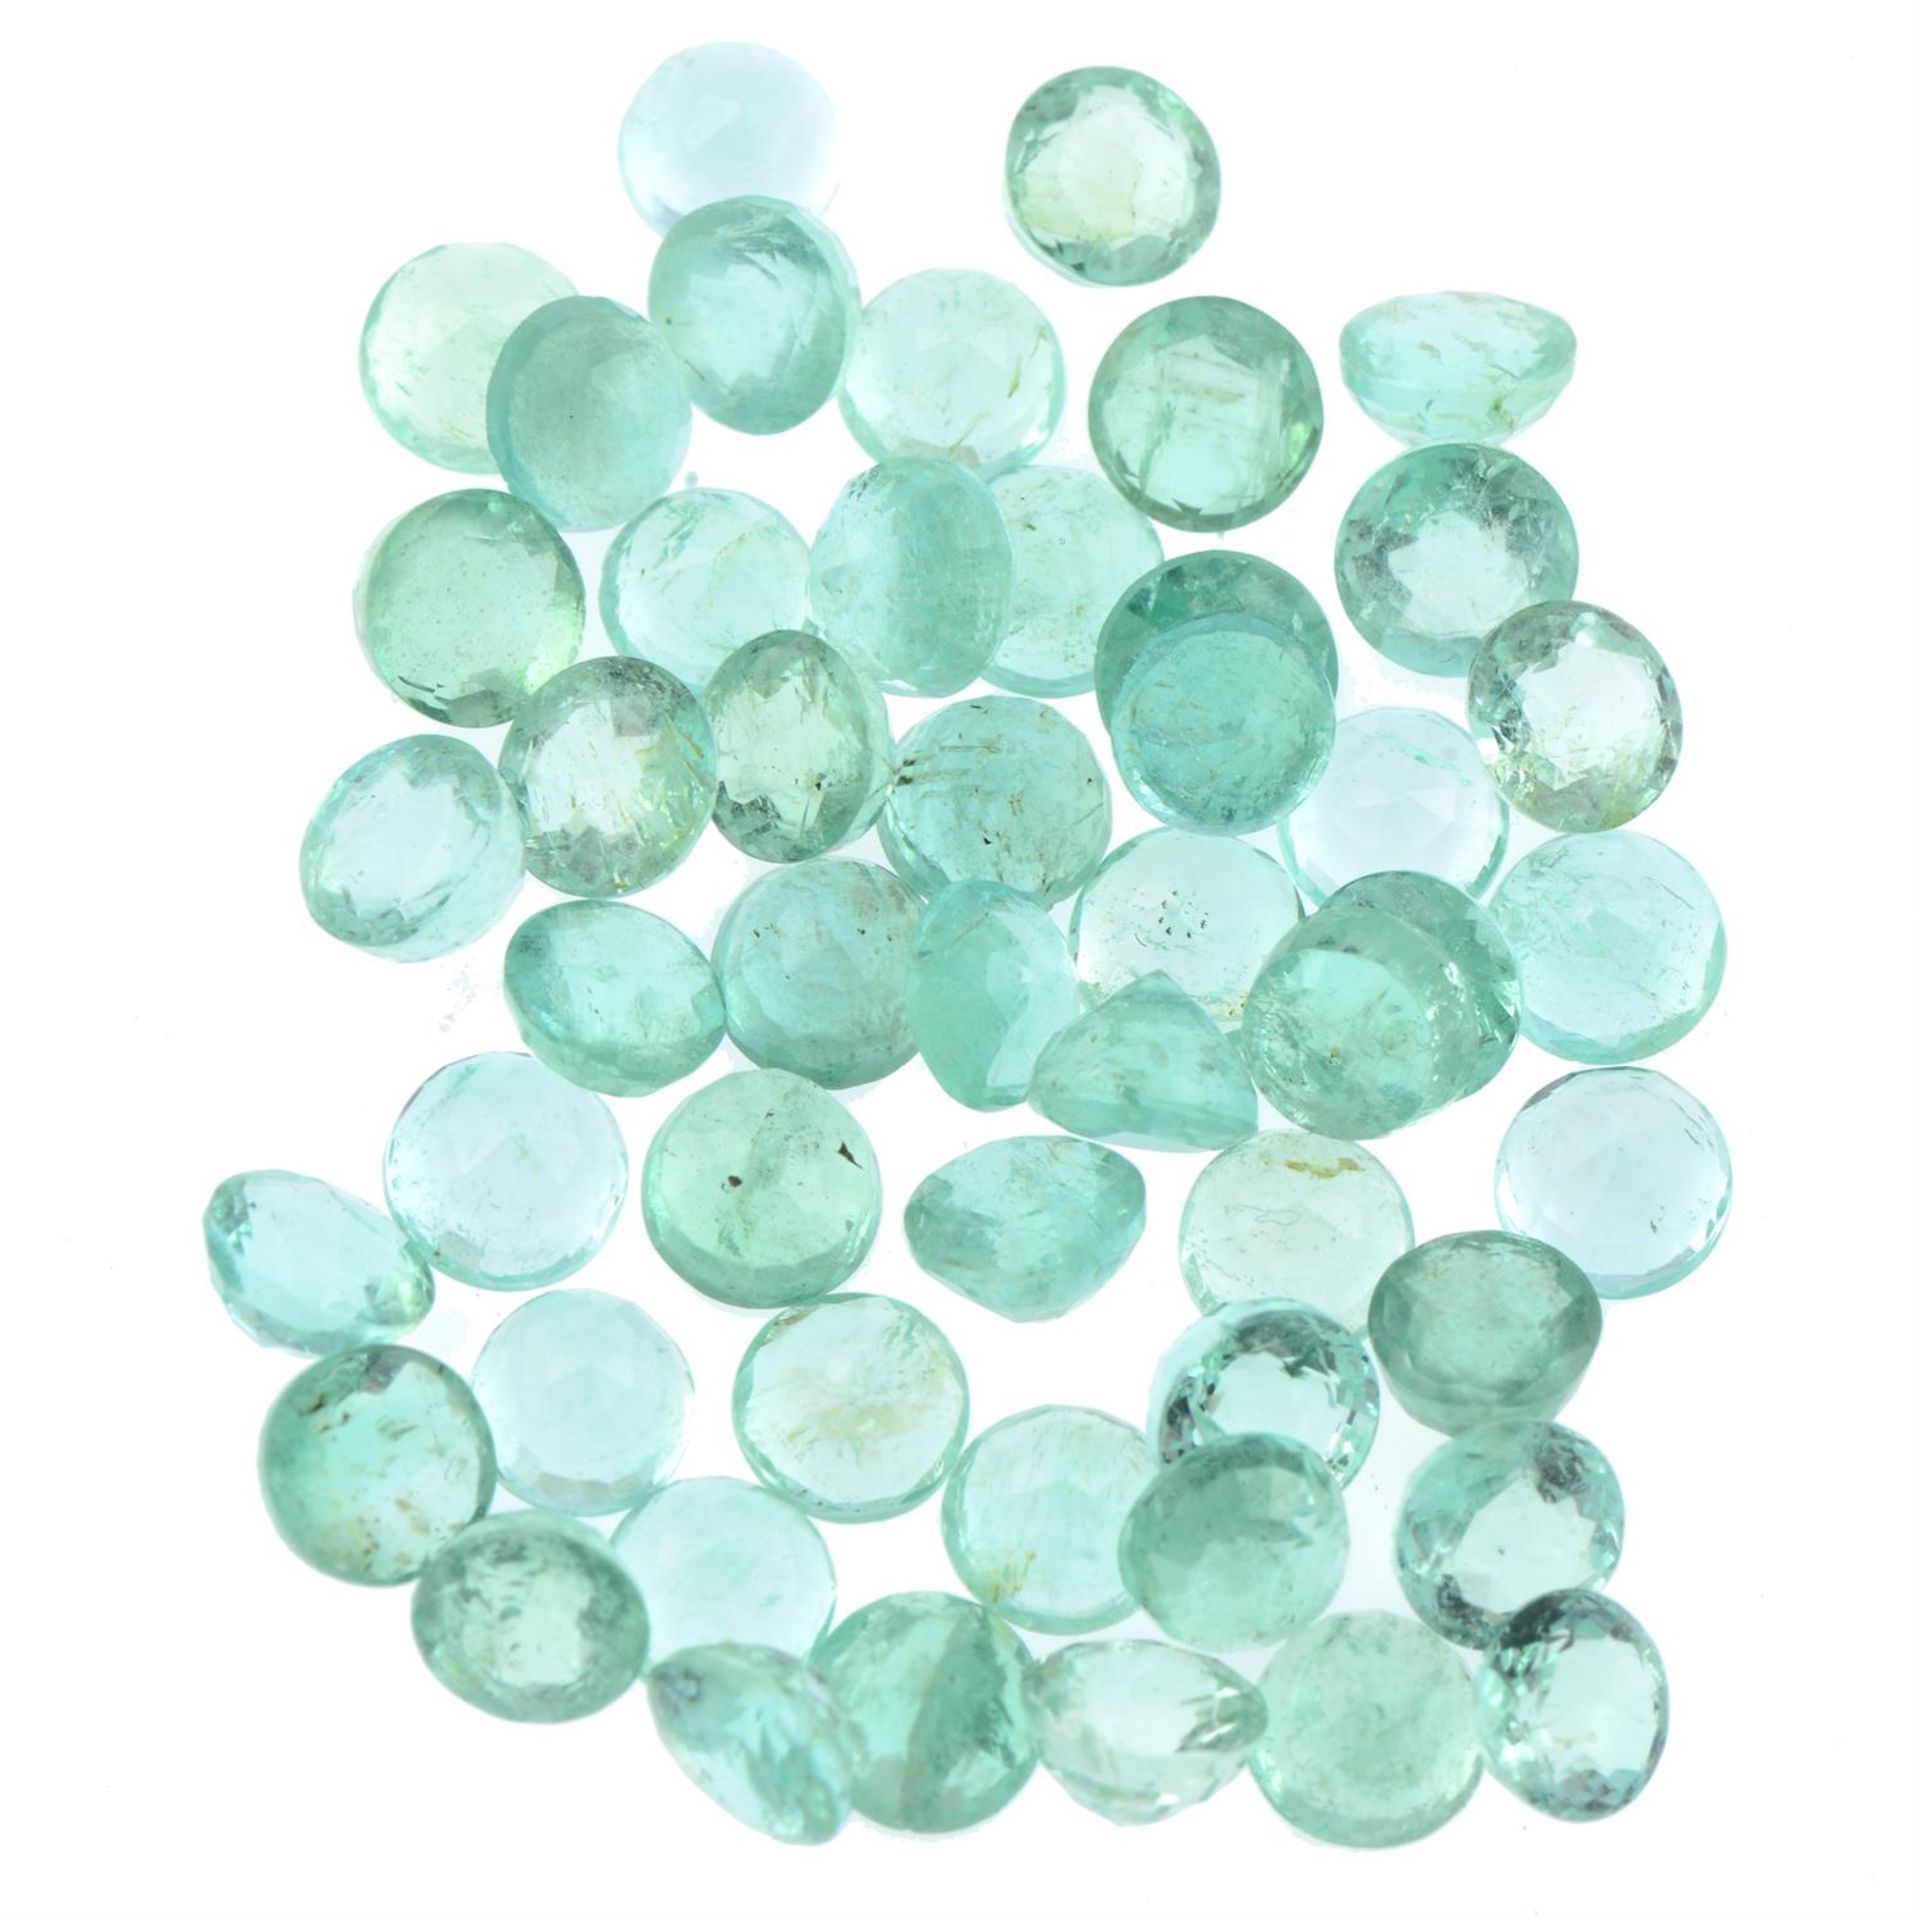 Circular-shape emeralds, 13.11ct